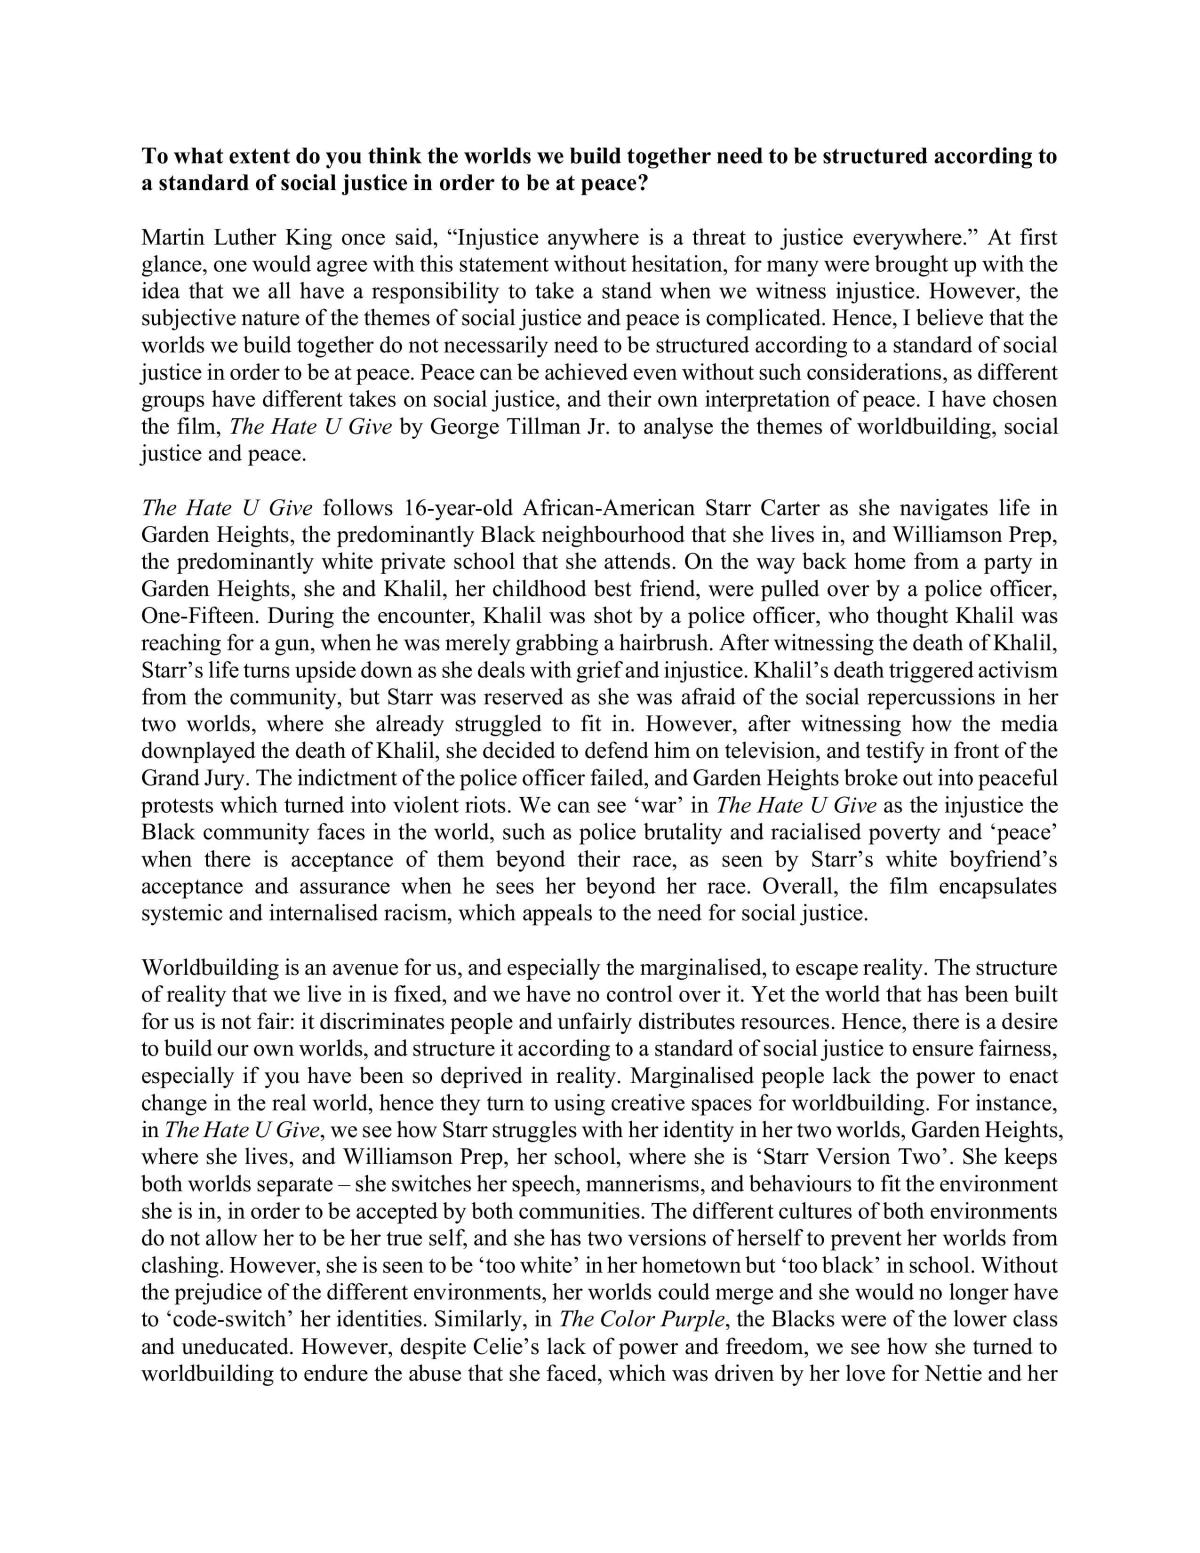 BQ Final Essay  - Page 1